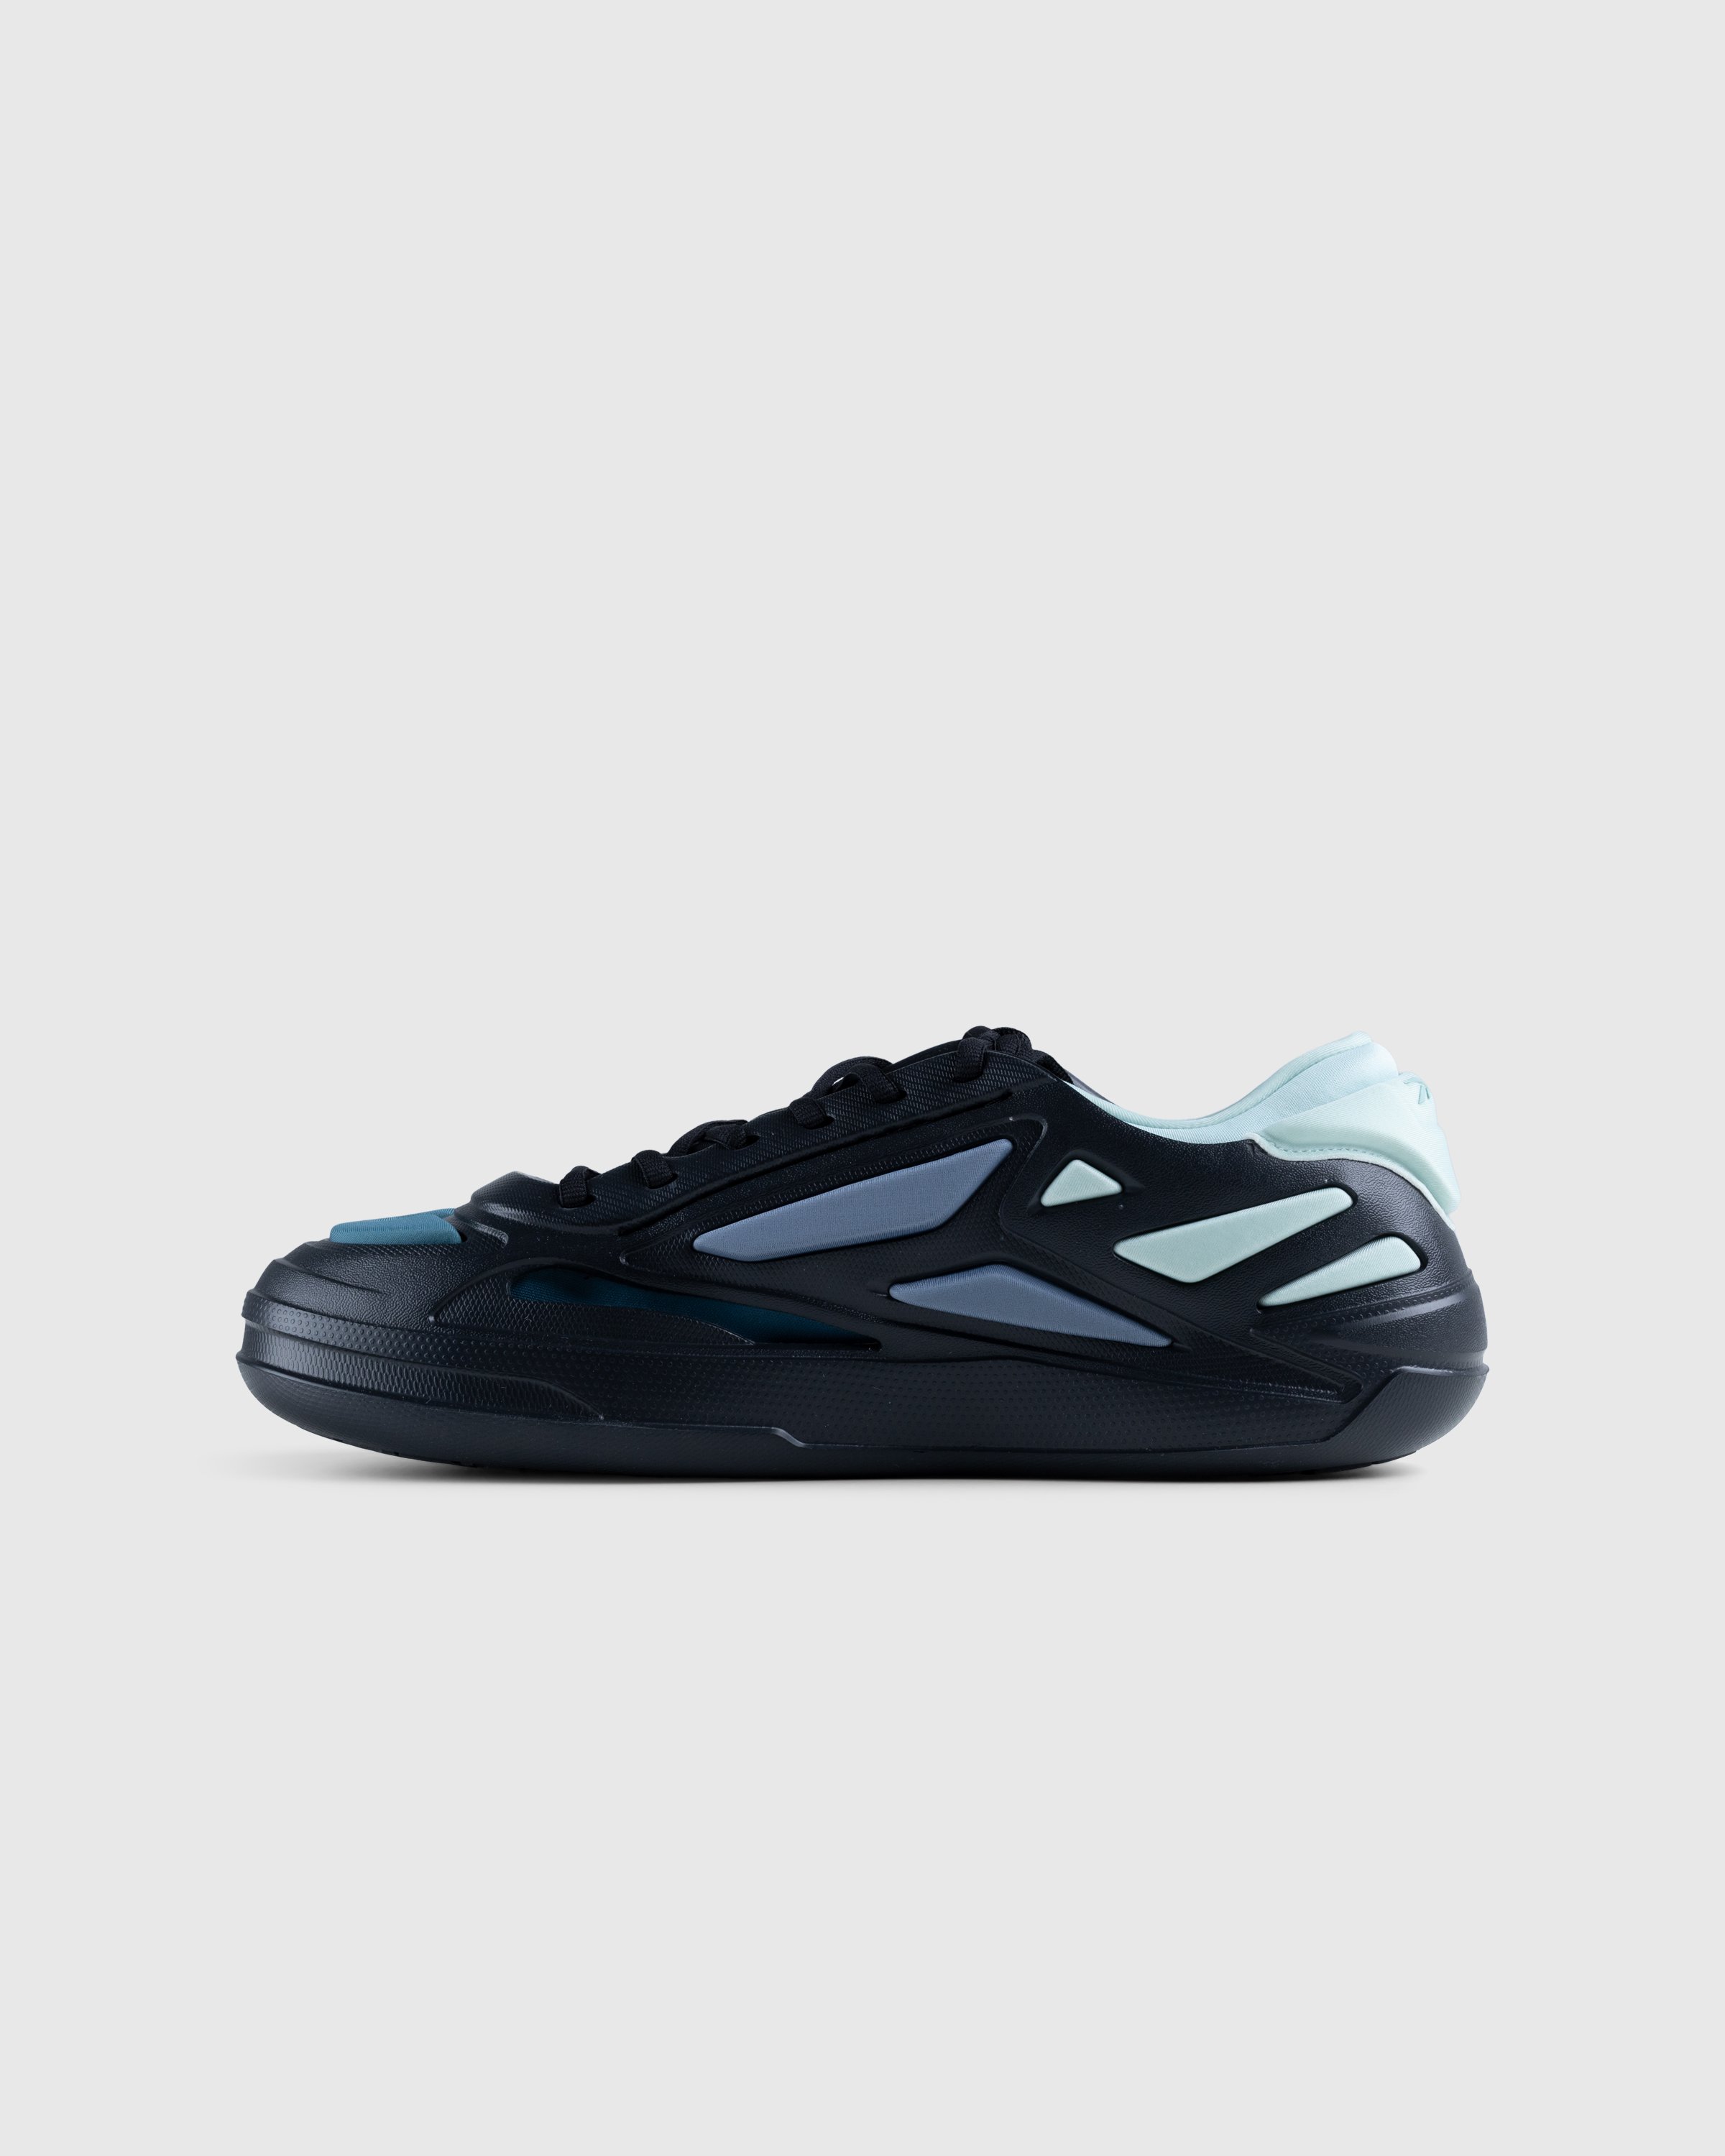 Reebok - Future Club C Black/Dusty Blue - Footwear - Multi - Image 2